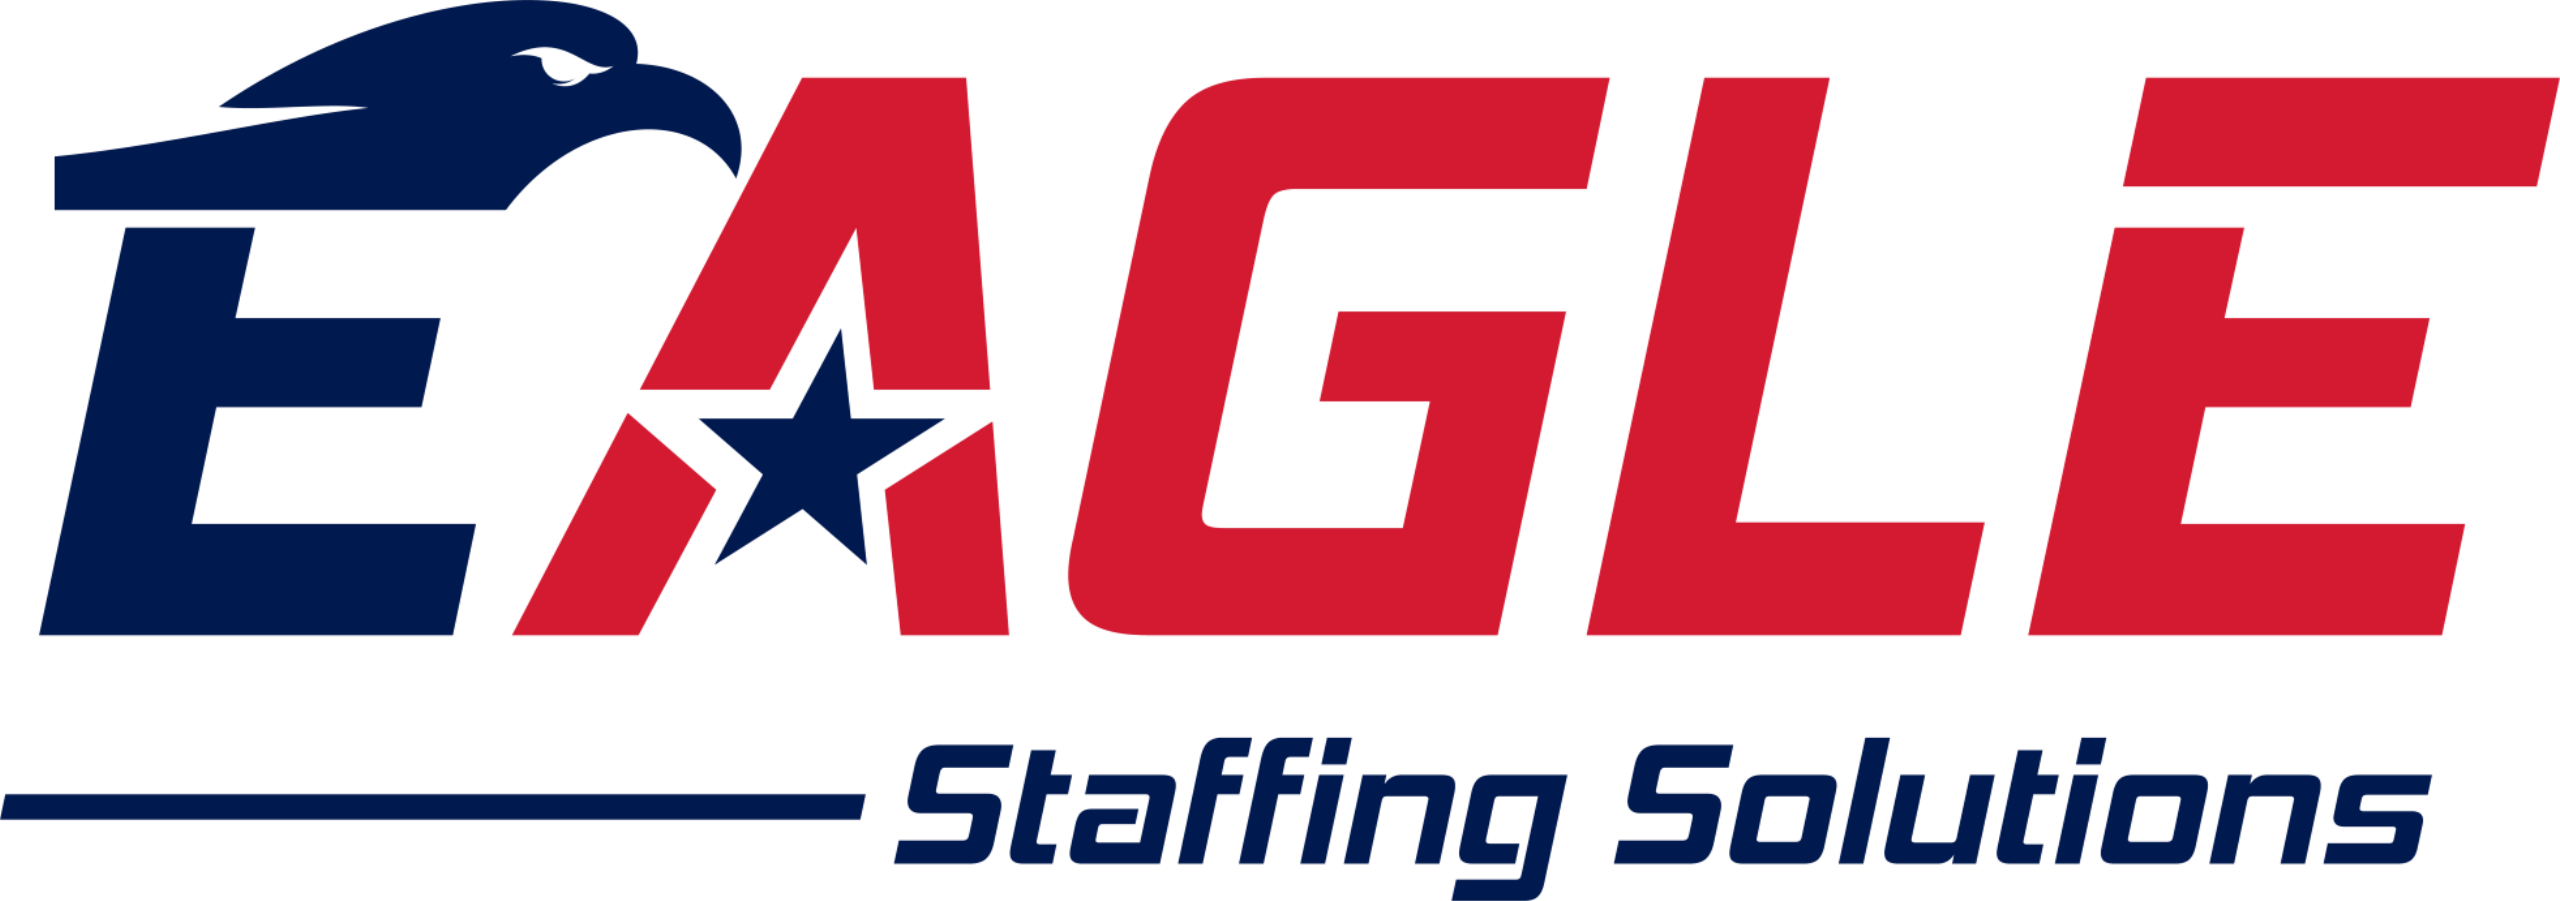 Eagle Staffing Solutions LLC Logo